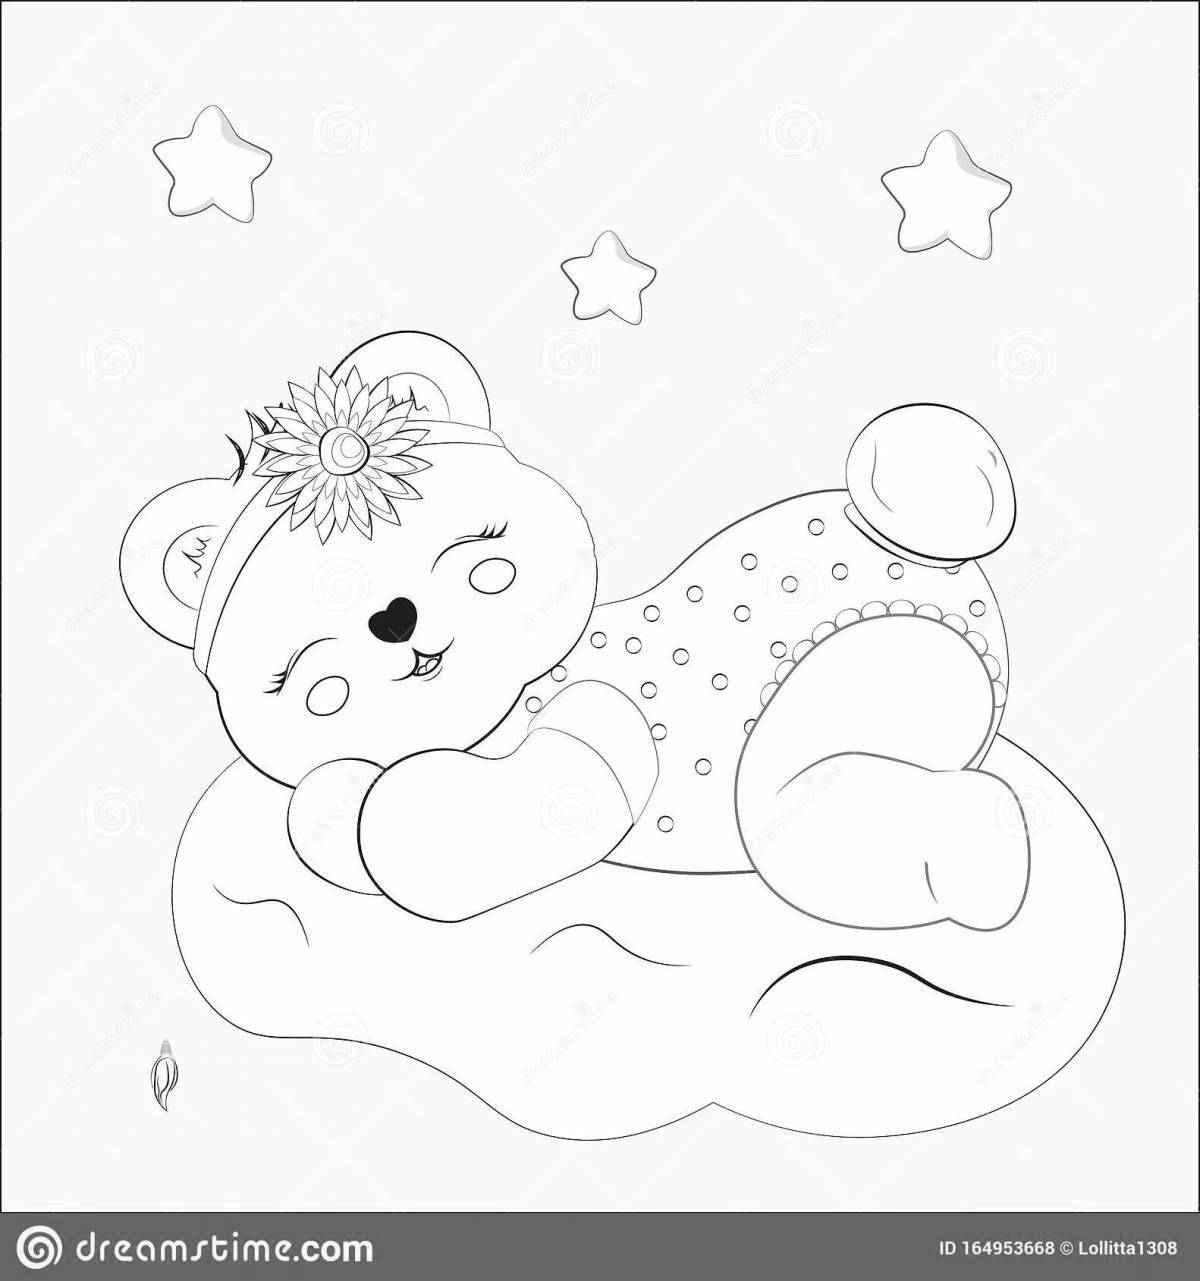 Sleeping bear coloring book